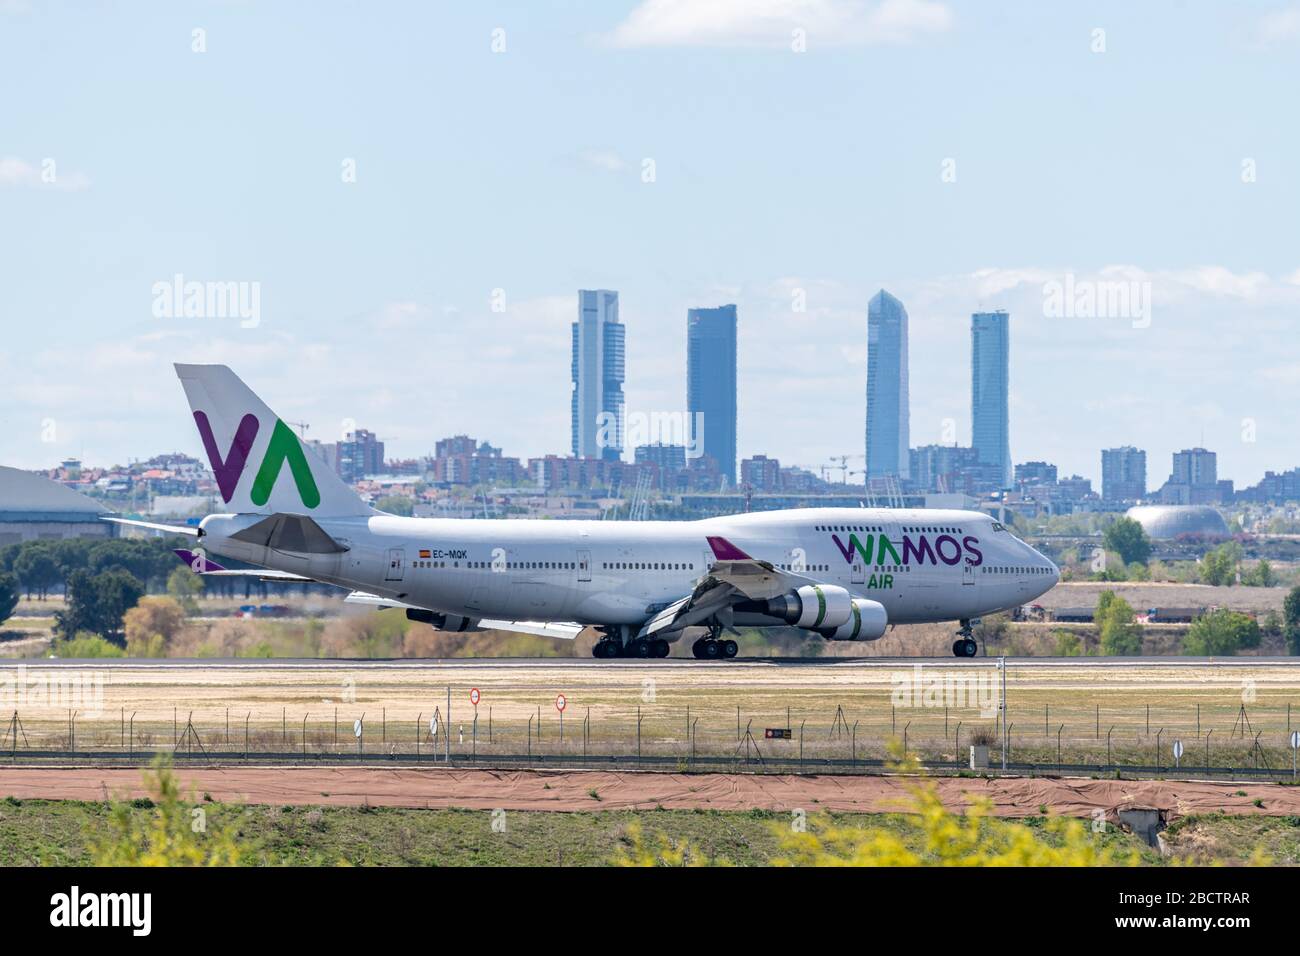 MADRID, SPANIEN - 14. APRIL 2019: VAMOS Airlines Boeing 747 Passagierflugzeug Landung auf dem Madrid-Barajas International Airport Adolfo Suarez im Background-Gebiet Stockfoto